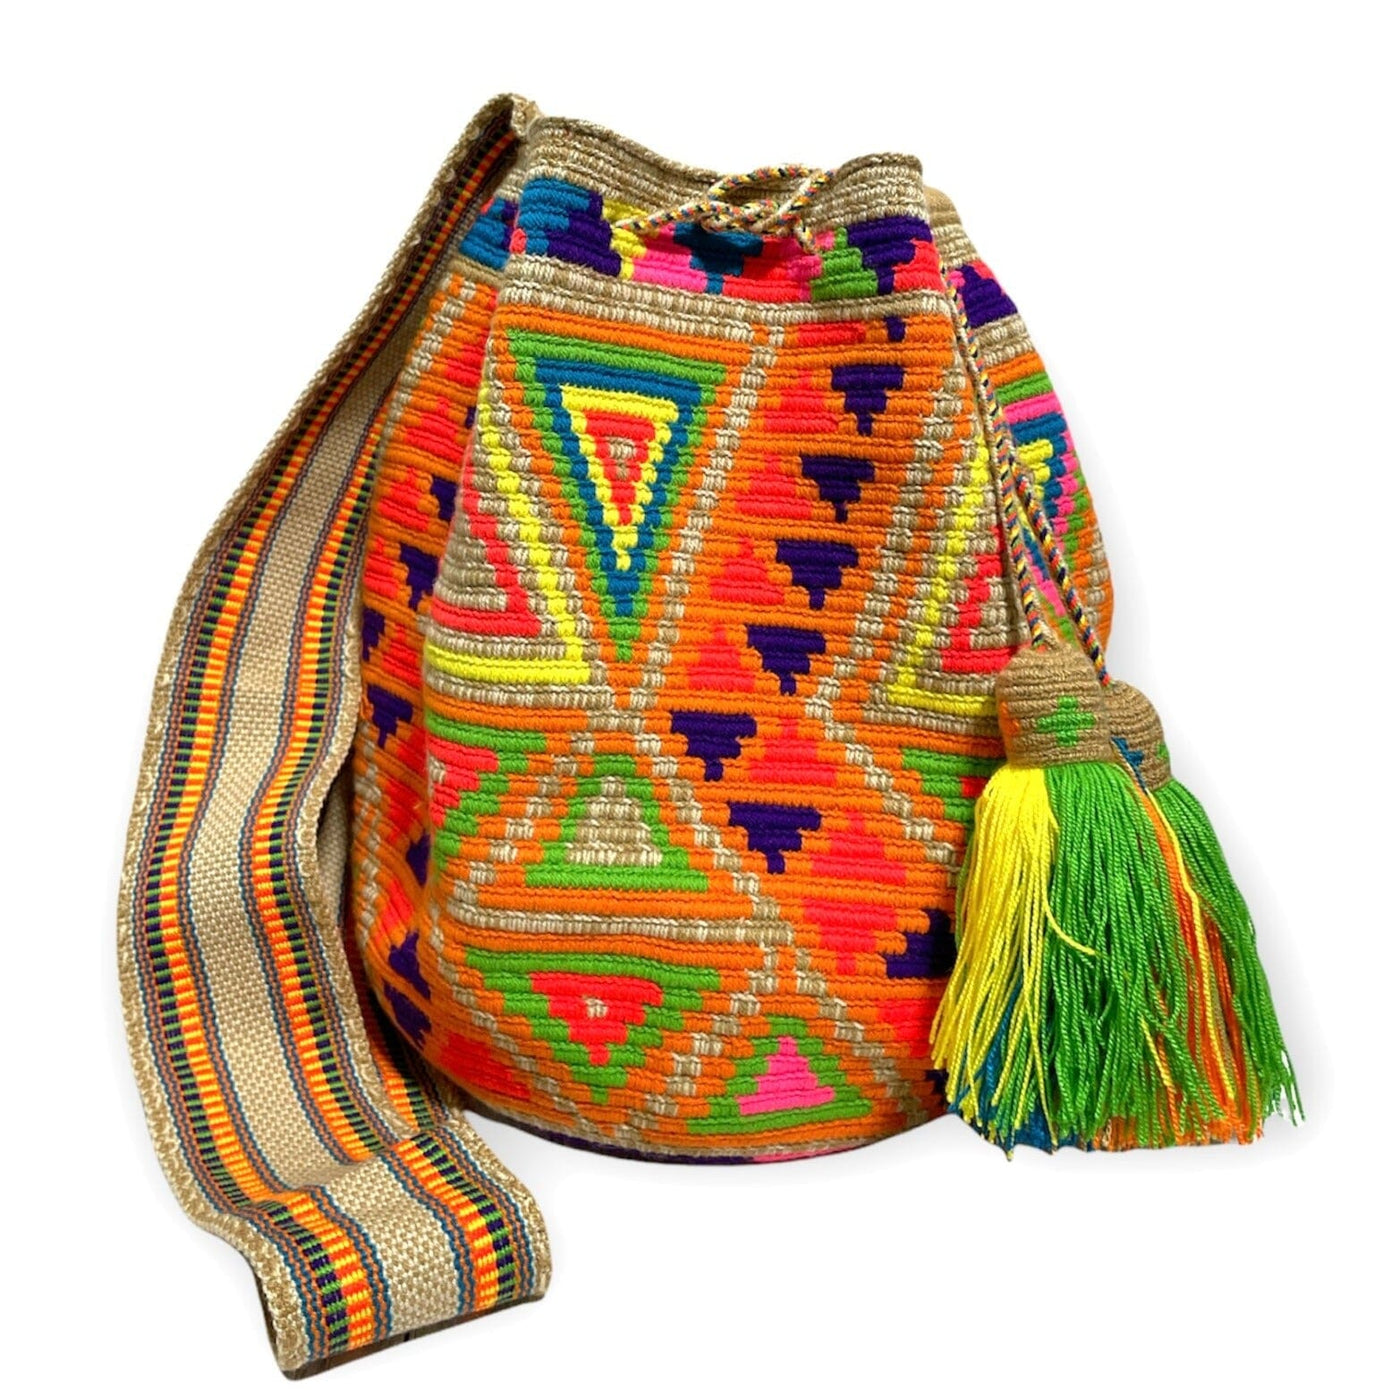 Neon Orange Boho Beach Bag for summer | Neon Colors Crochet Bag | Colorful 4u